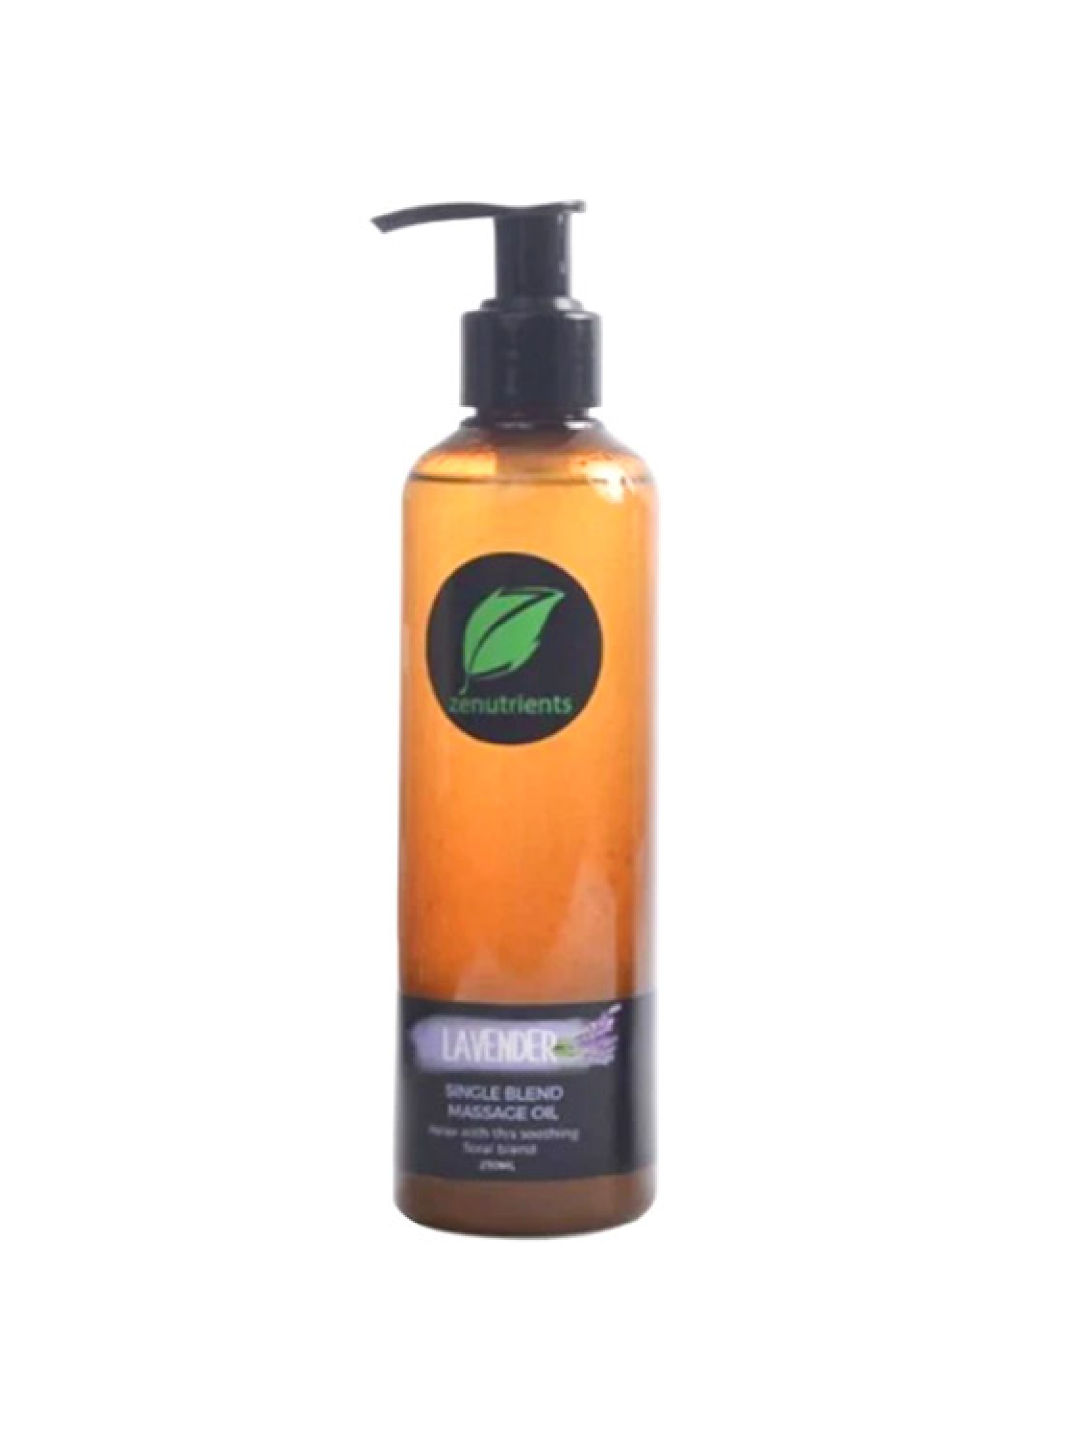 Zenutrients Lavender Single Blend Massage Oil (250mL)